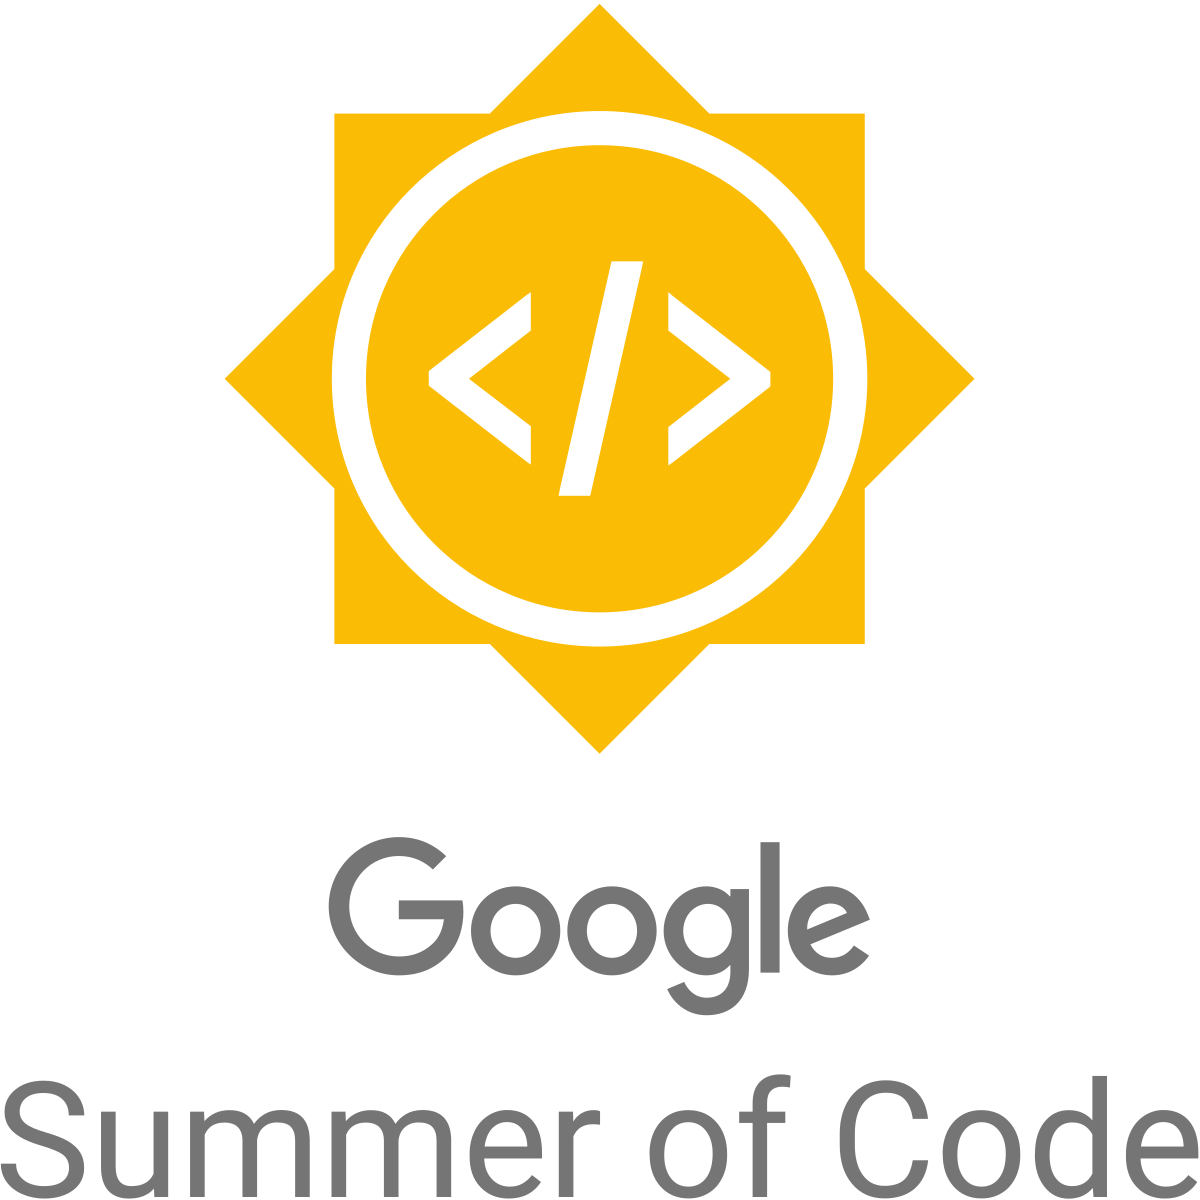 The Google Summer of Code logo.